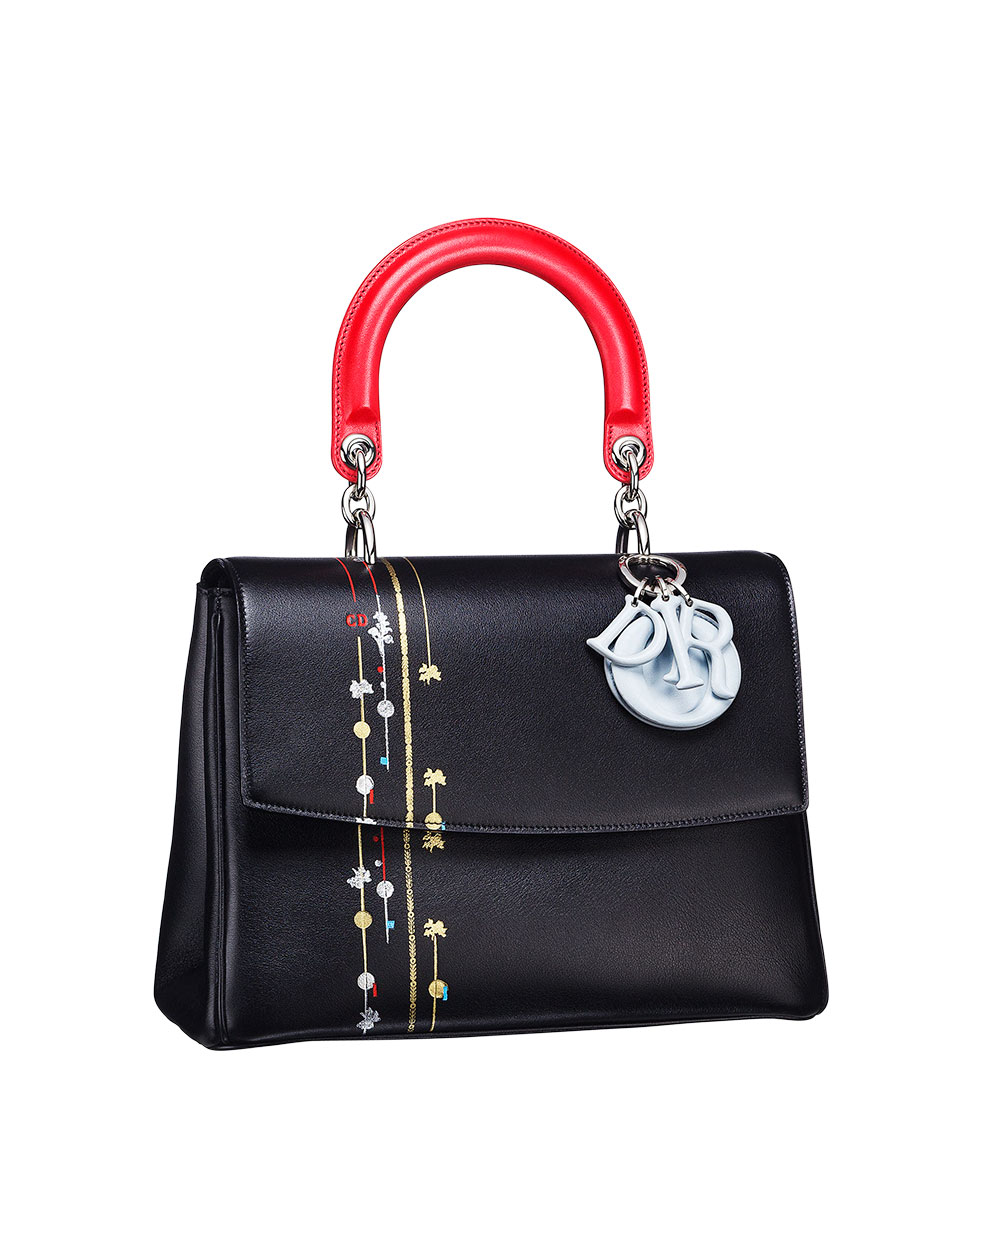 Christian Dior bag, $6,400.